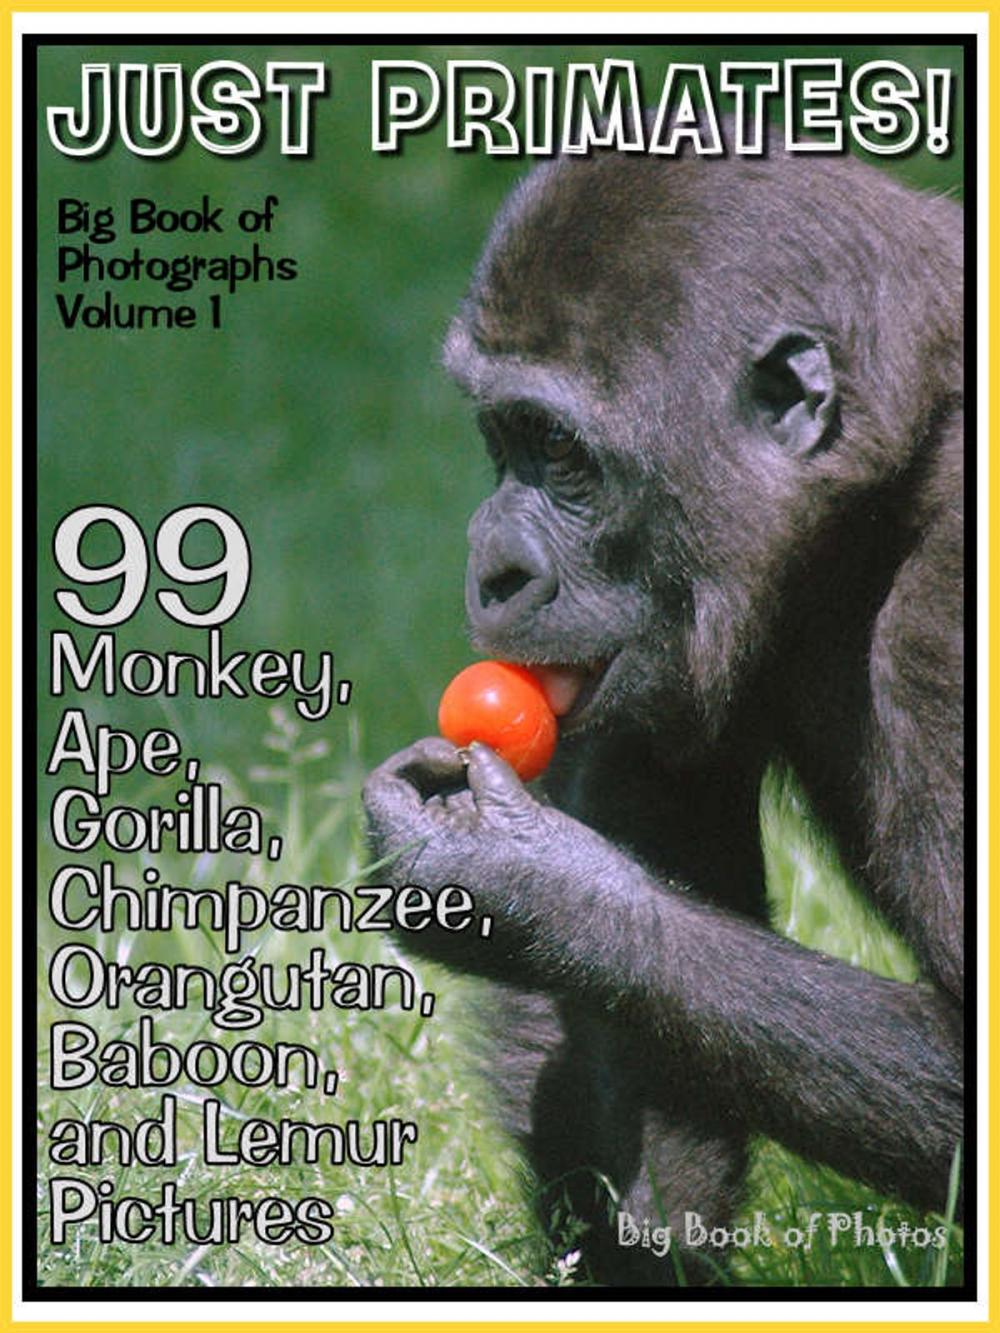 Big bigCover of 99 Pictures: Just Primate Photos! Big Book of Monkey, Ape, Gorilla, Chimpanzee, Orangutan, Baboon, and Lemur Photographs, Vol. 1